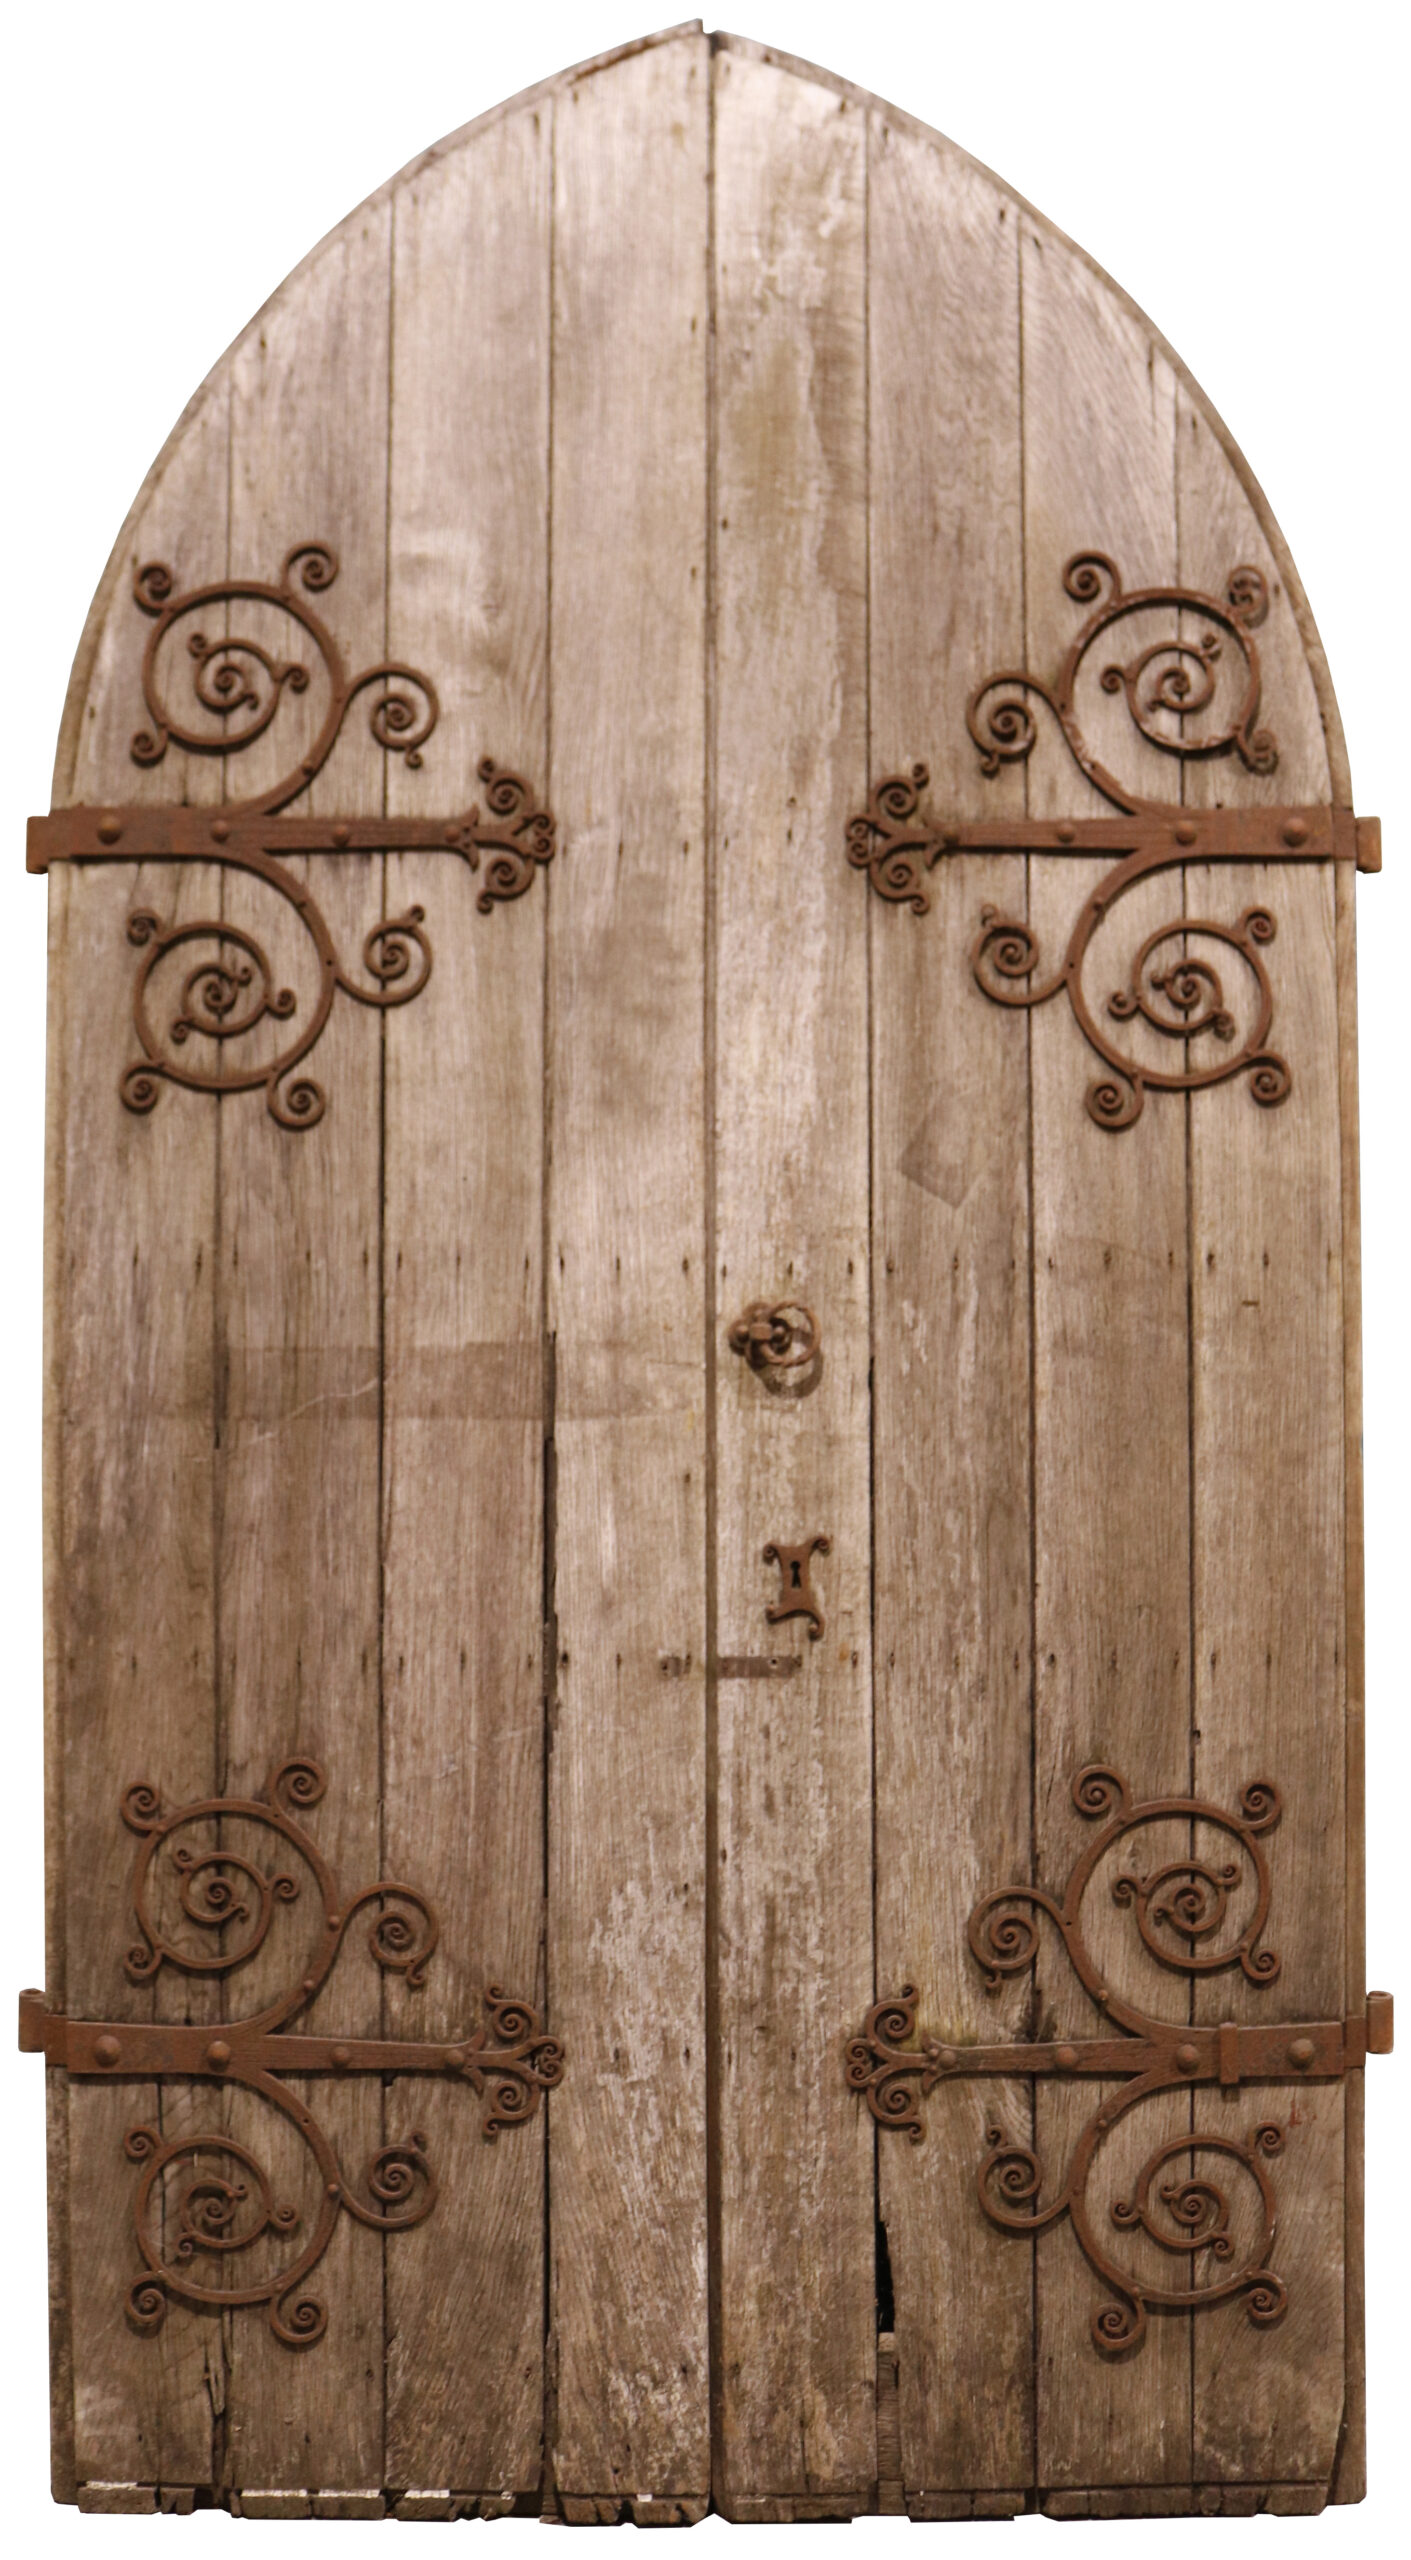 Set of Reclaimed Gothic Church Doors